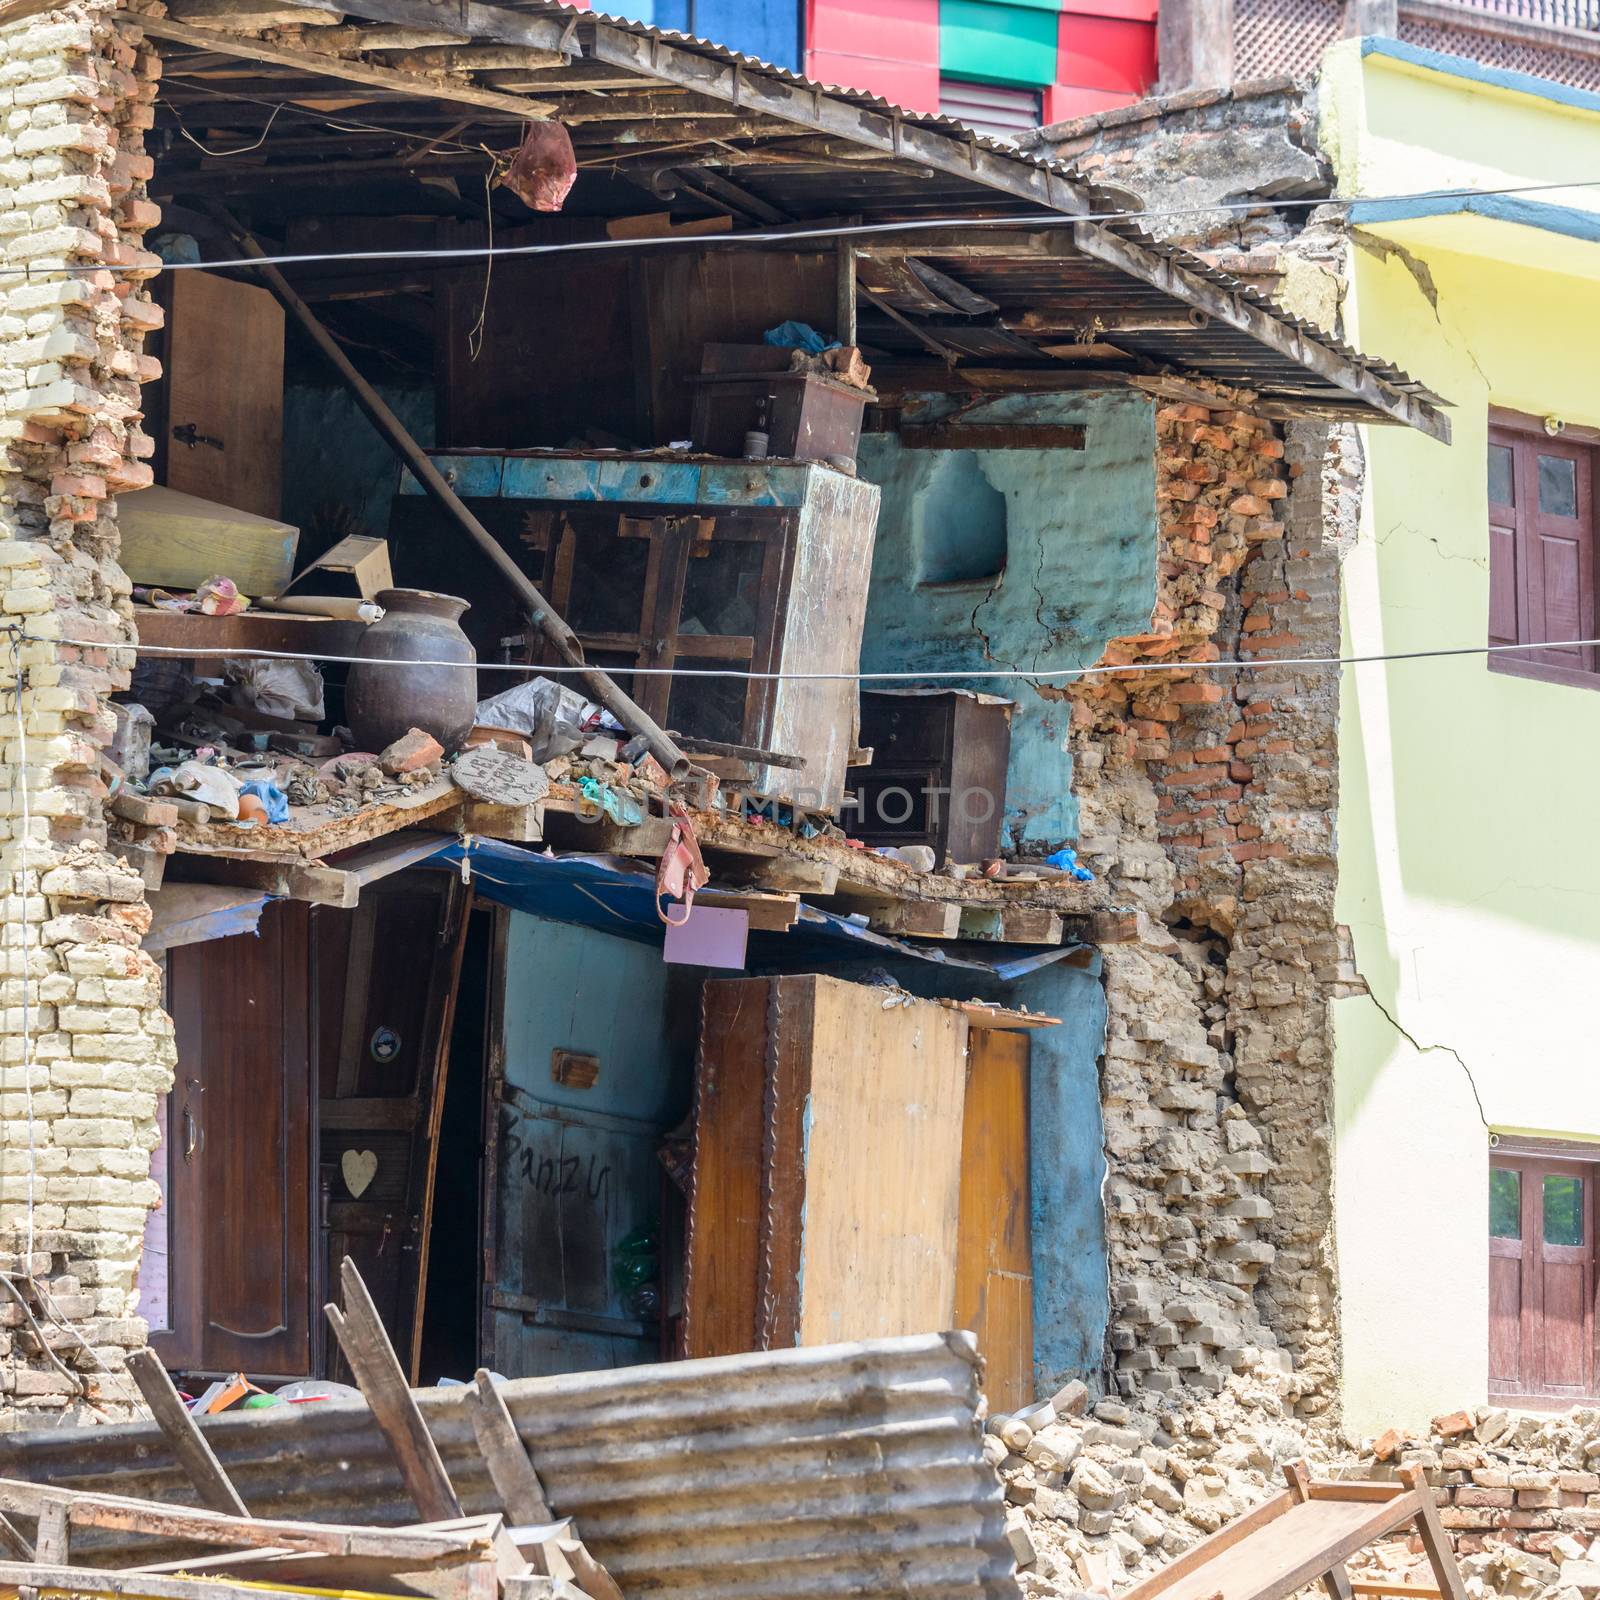 Nepal earthquake by dutourdumonde